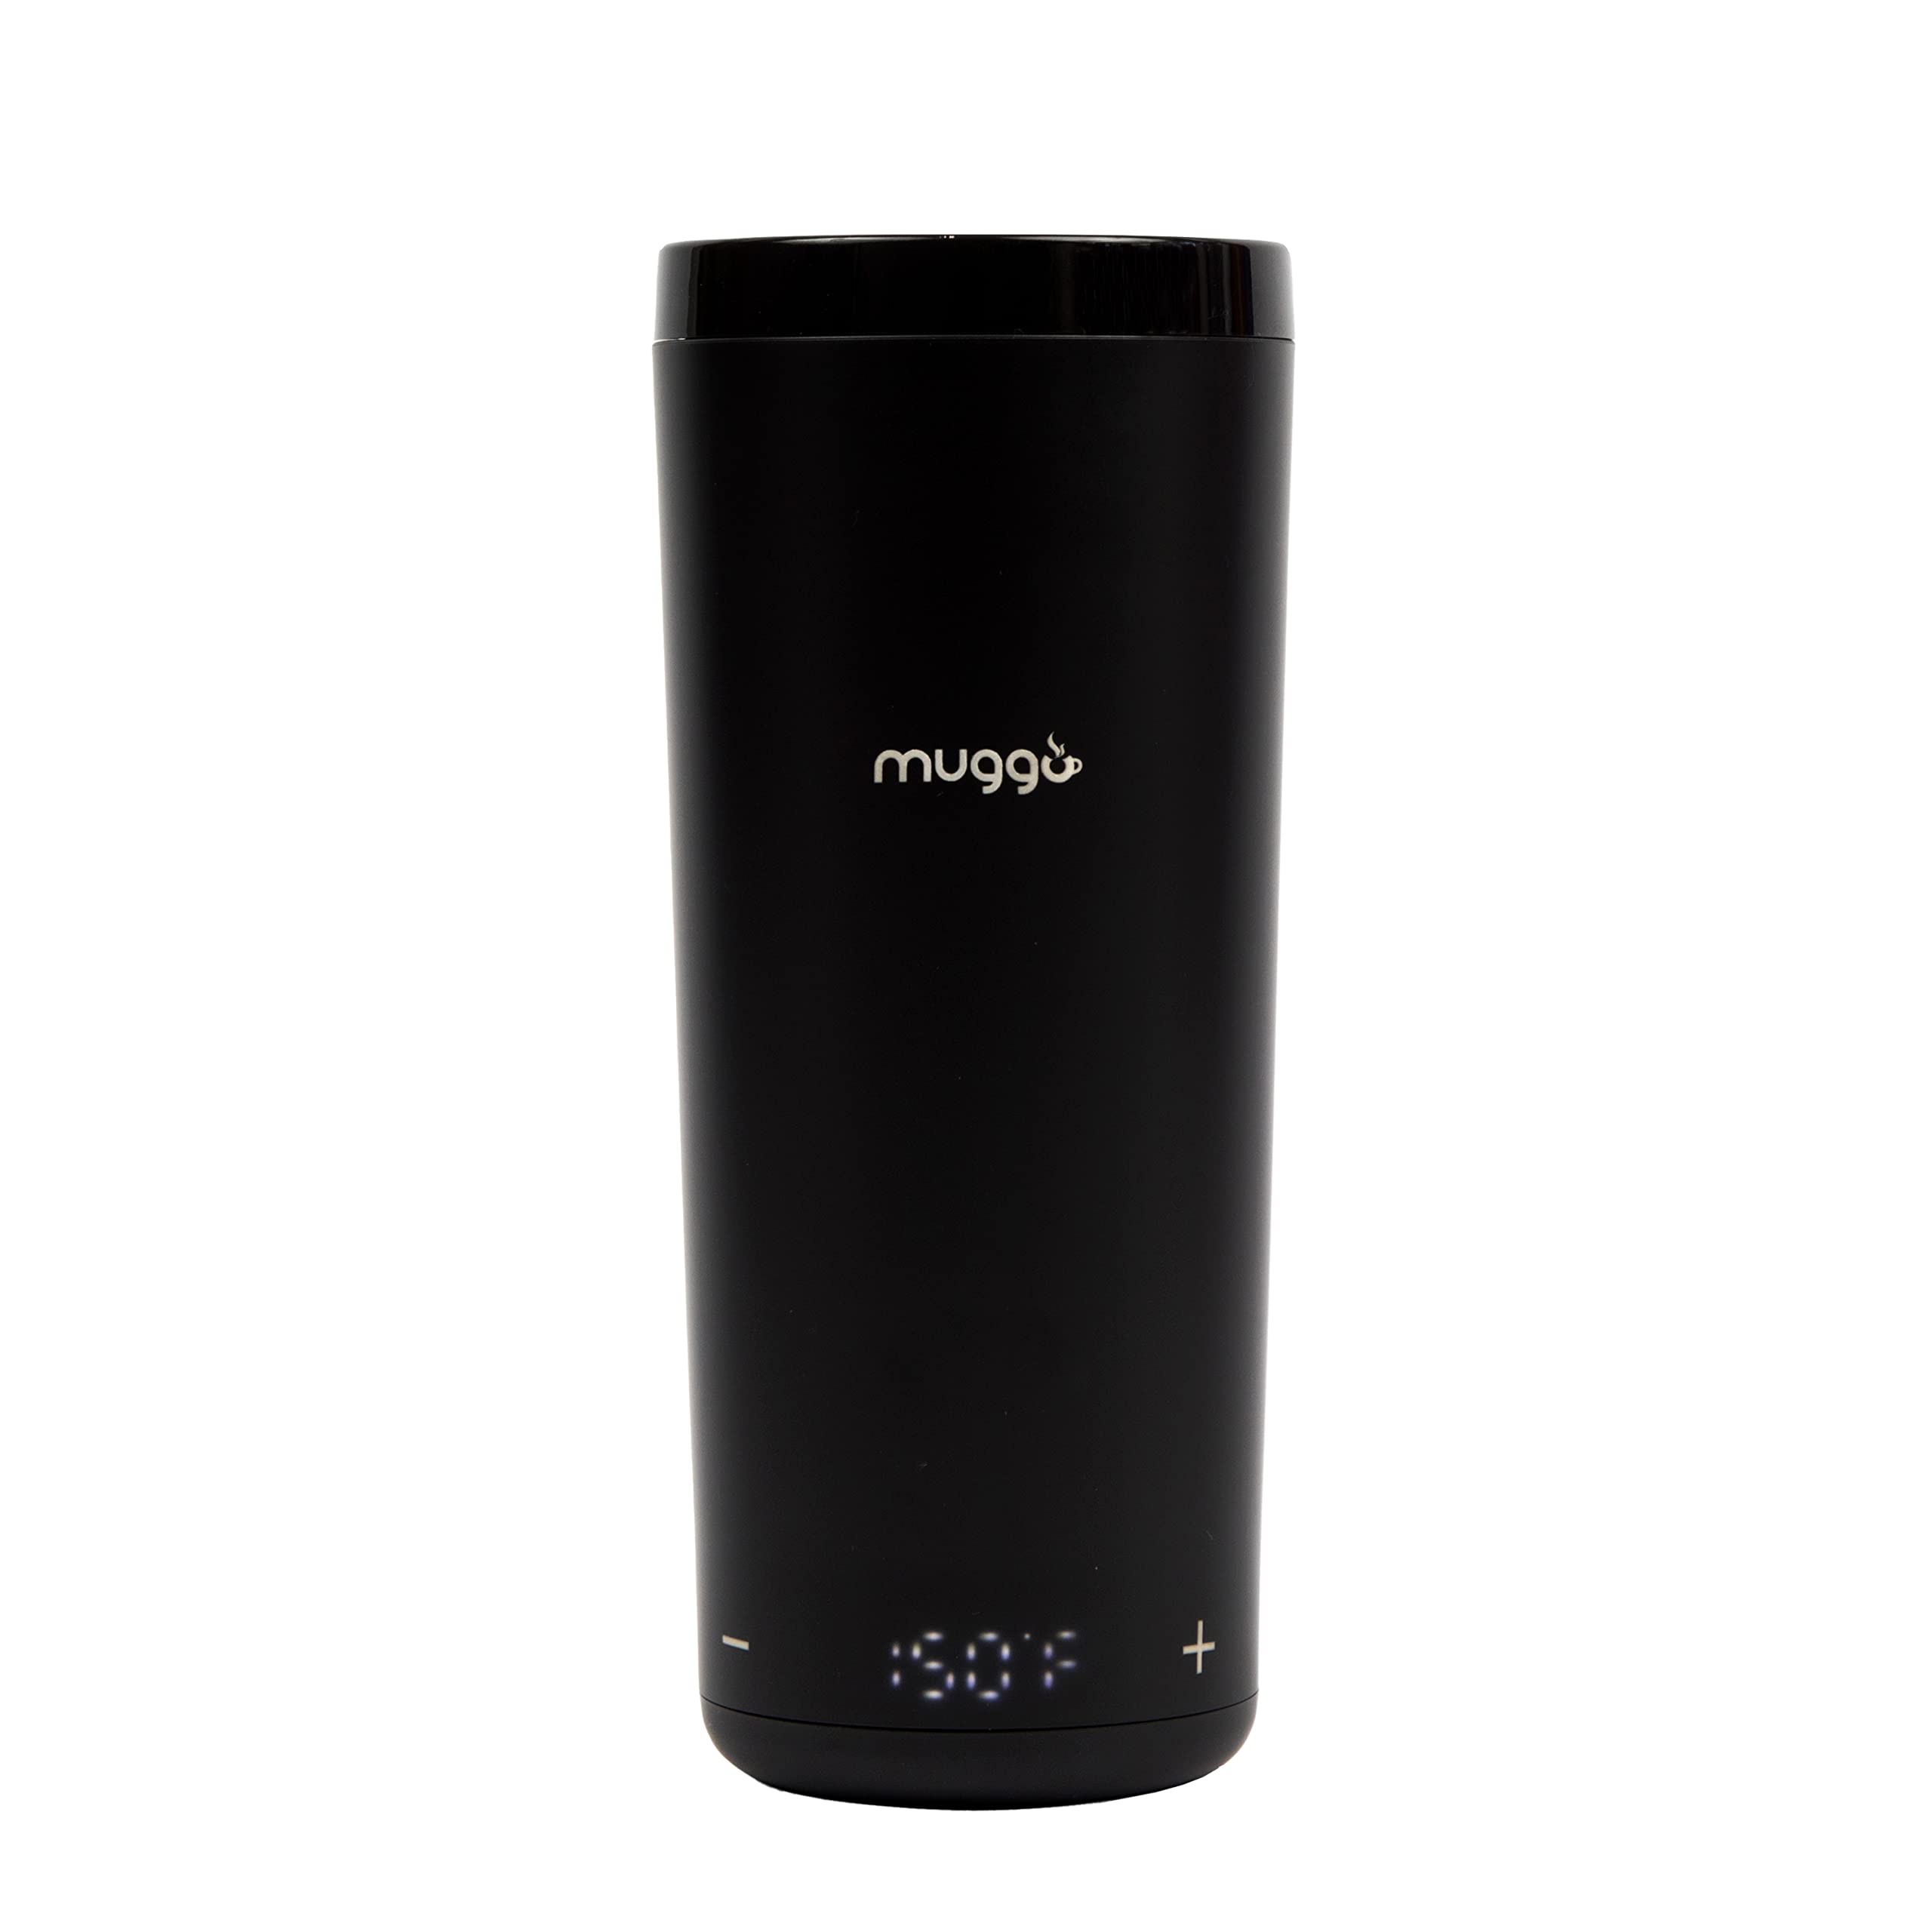 Muggo 12 Oz Self-Heating Coffee Mug, Temperature Control Travel Mug, Black Portable Heated Coffee Mug With Leak-Proof Lid & 3-Ho